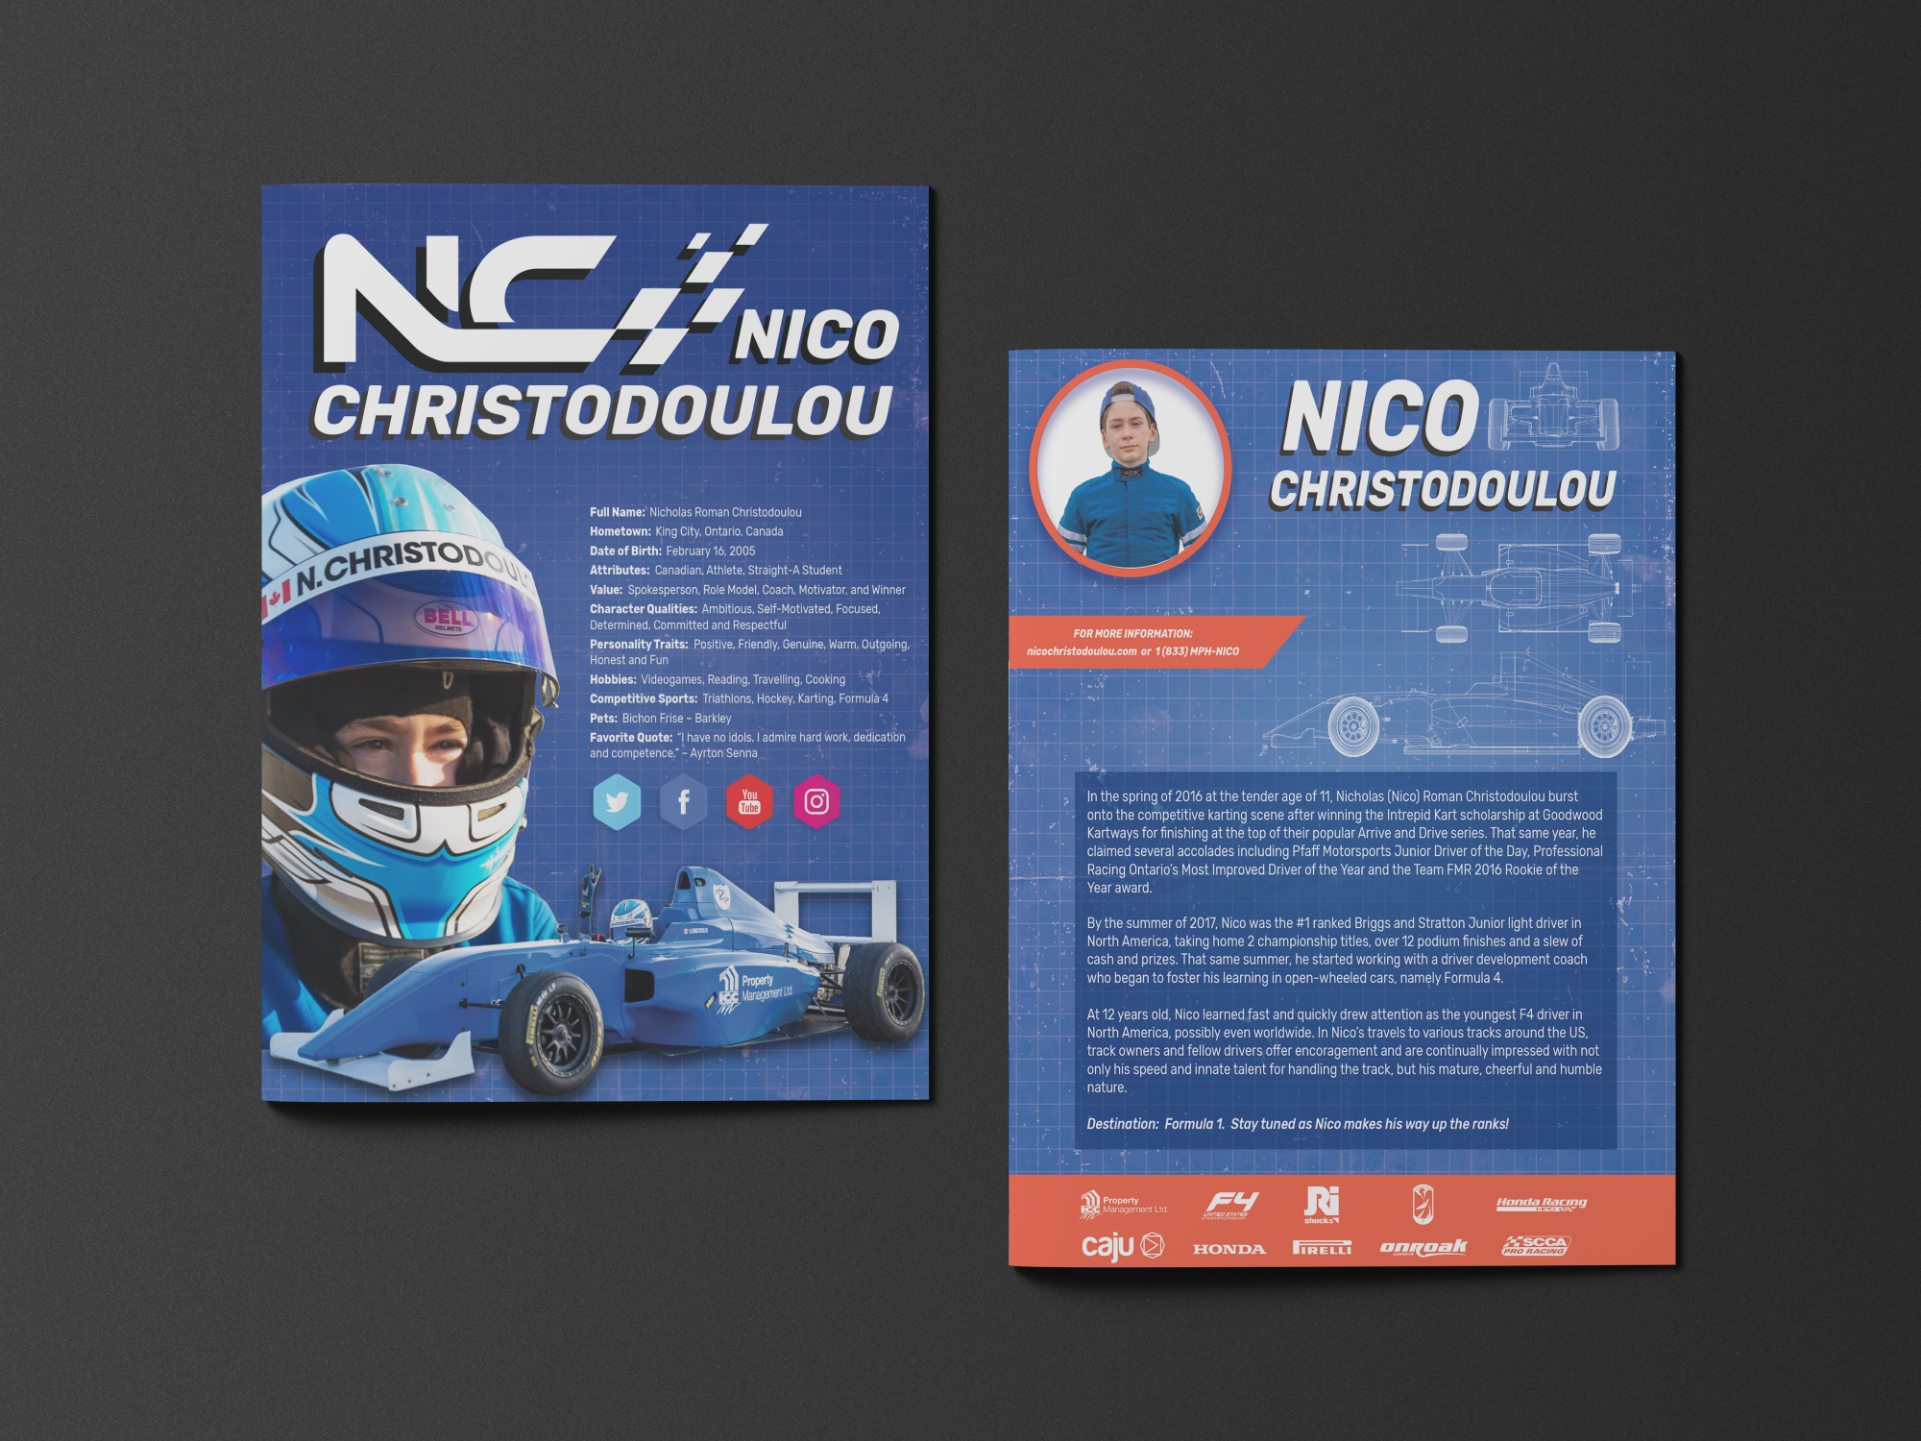 Nico Christodoulou information sheet